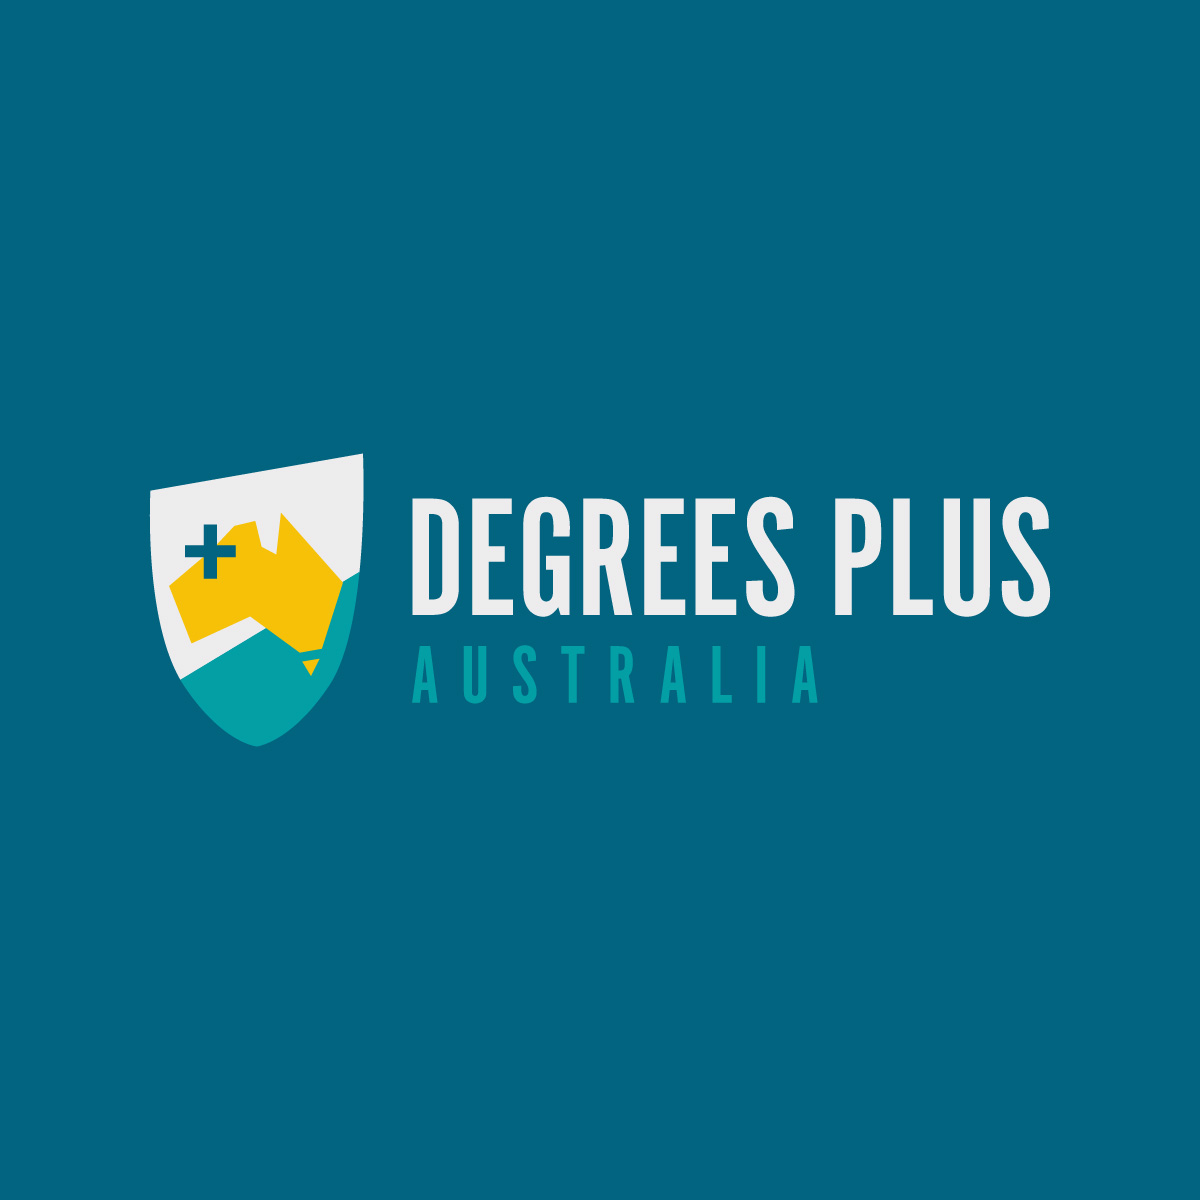 nohands-logo-design-degrees-plus